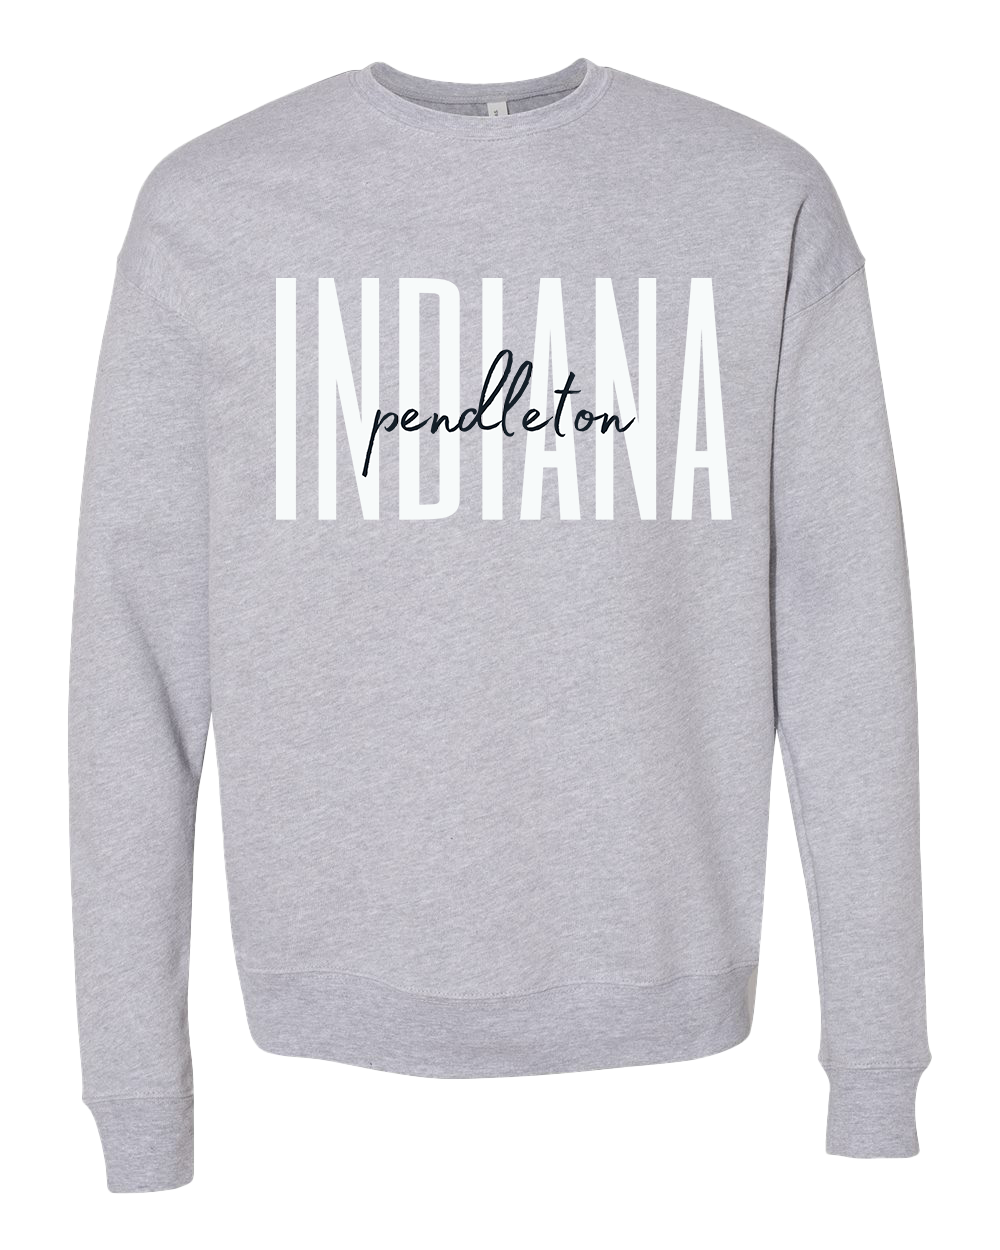 Pendleton Indiana Script Crew Sweatshirt - Athletic Grey